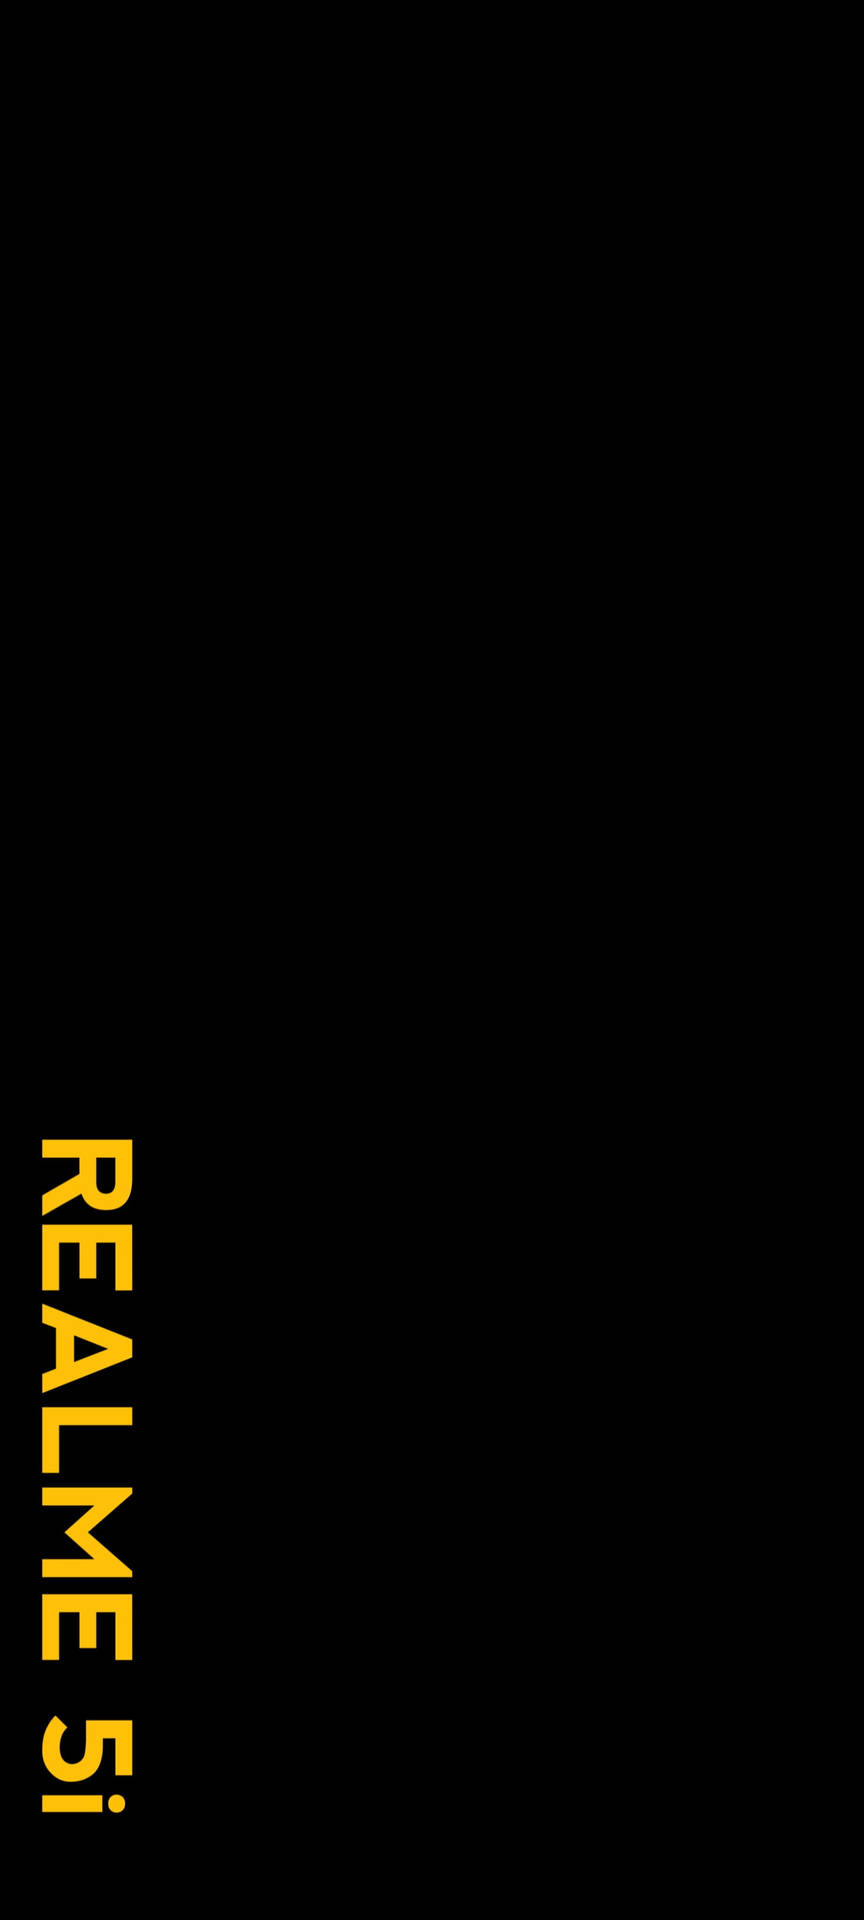 Realme Logo 5i Wallpaper